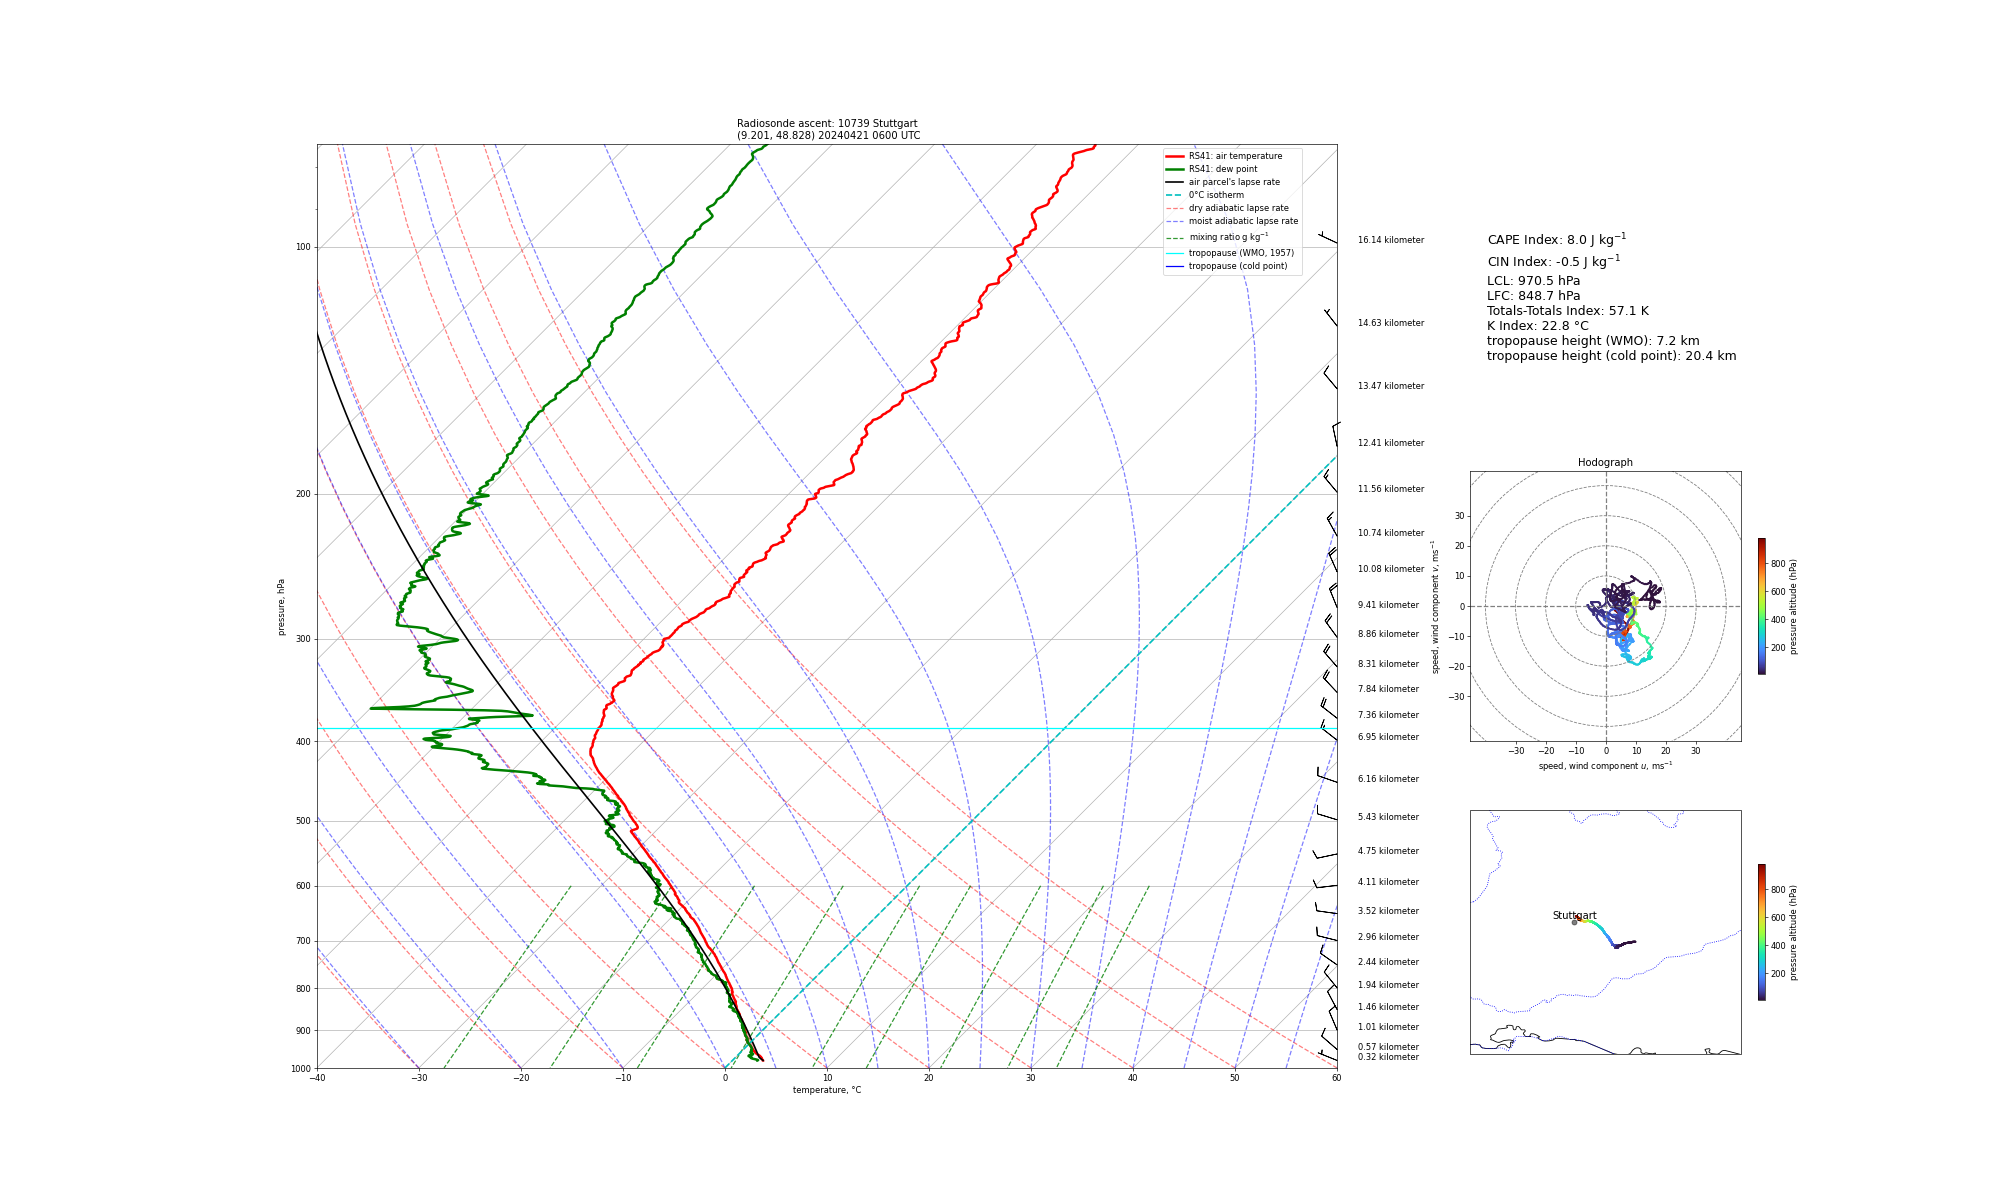 Visualisation of the radiosounding profile at Stuttgart at 0600 UTC